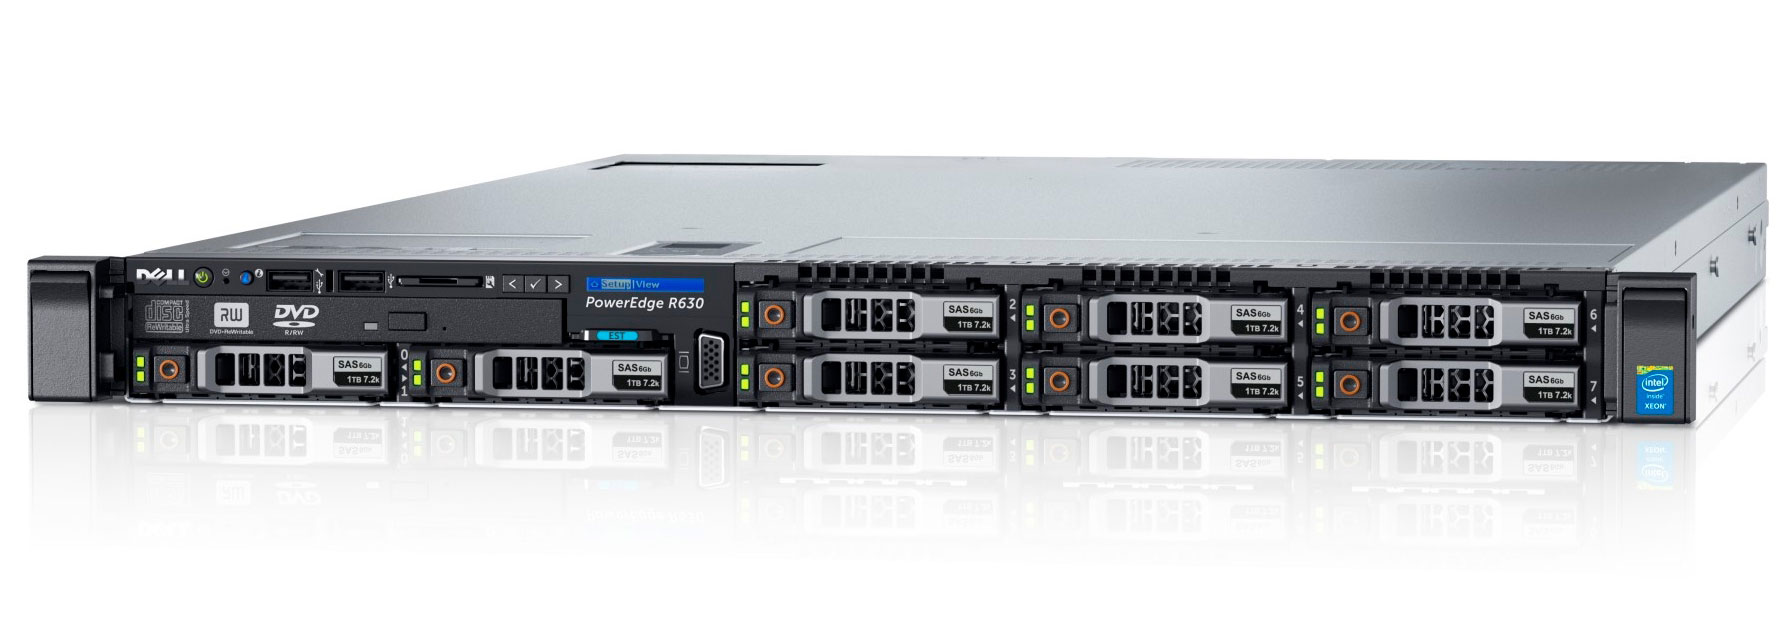 Подробное фото Сервер DELL PowerEdge R630 2*Xeon E5-2697Av4 256Gb 2400T DDR4 8x noHDD 2.5" SAS RAID Perc H730, 2*PSU 750W